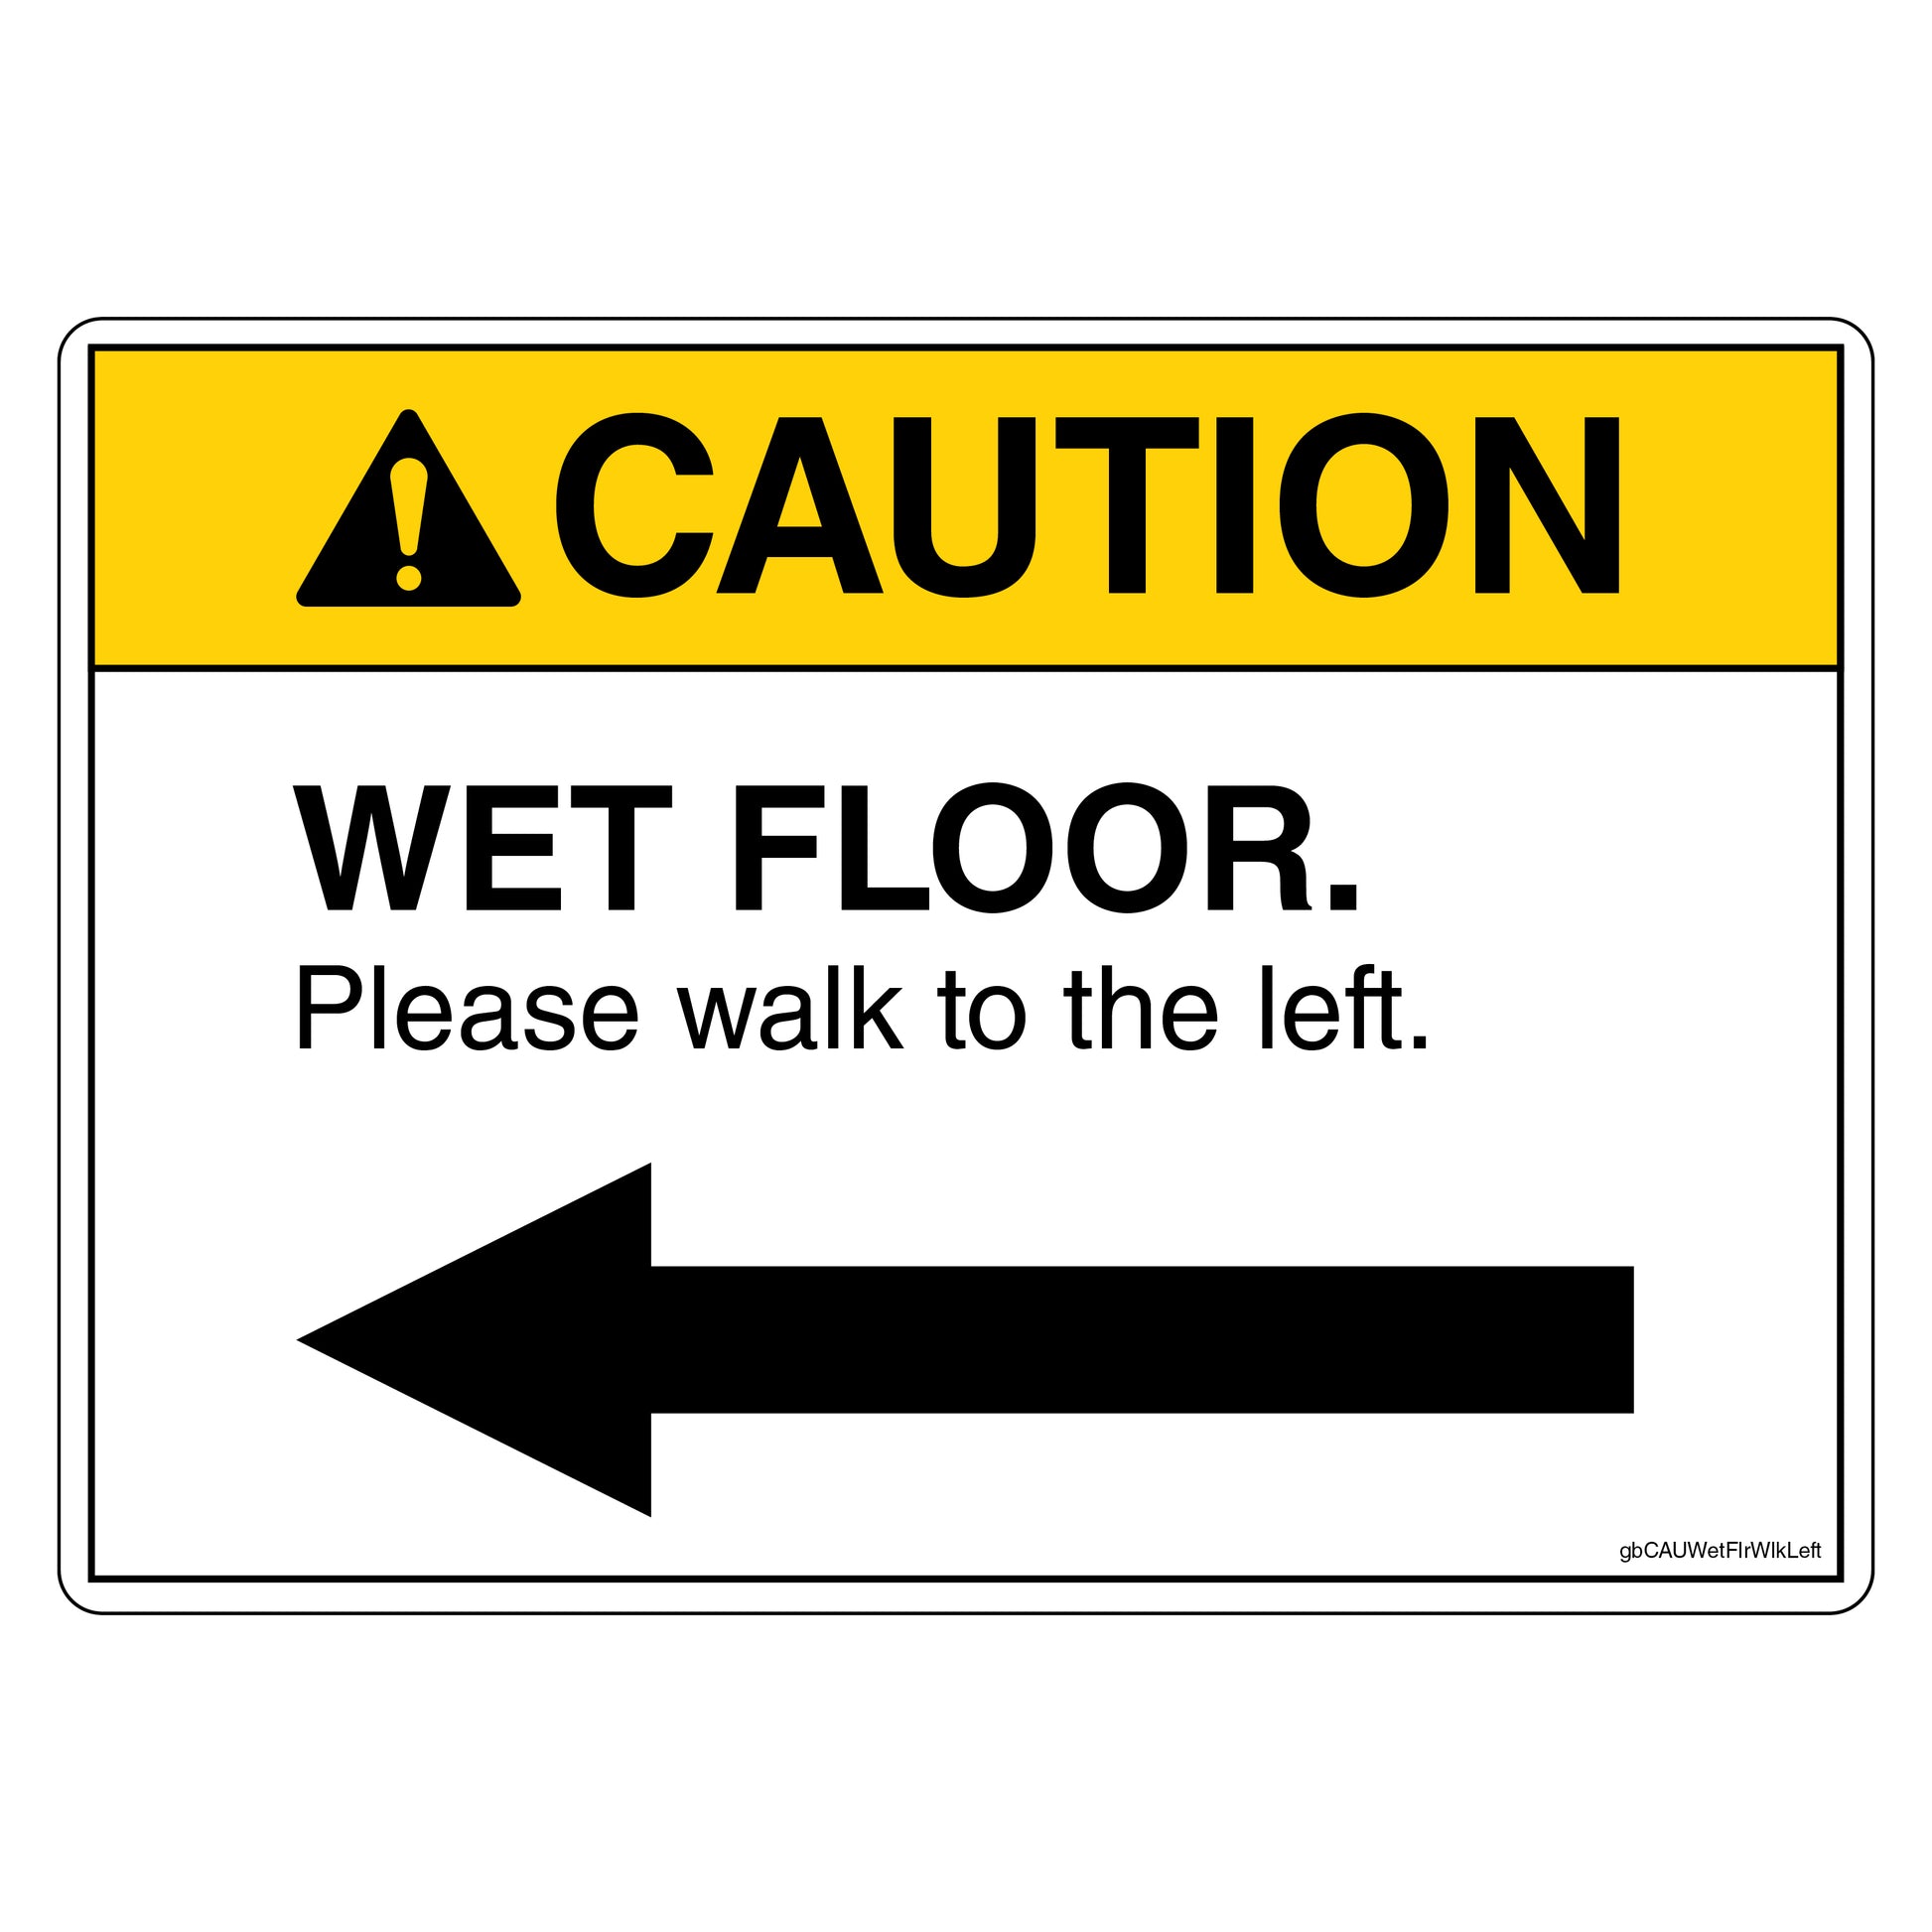 Caution Wet Floor Please Walk to the Left Decal.